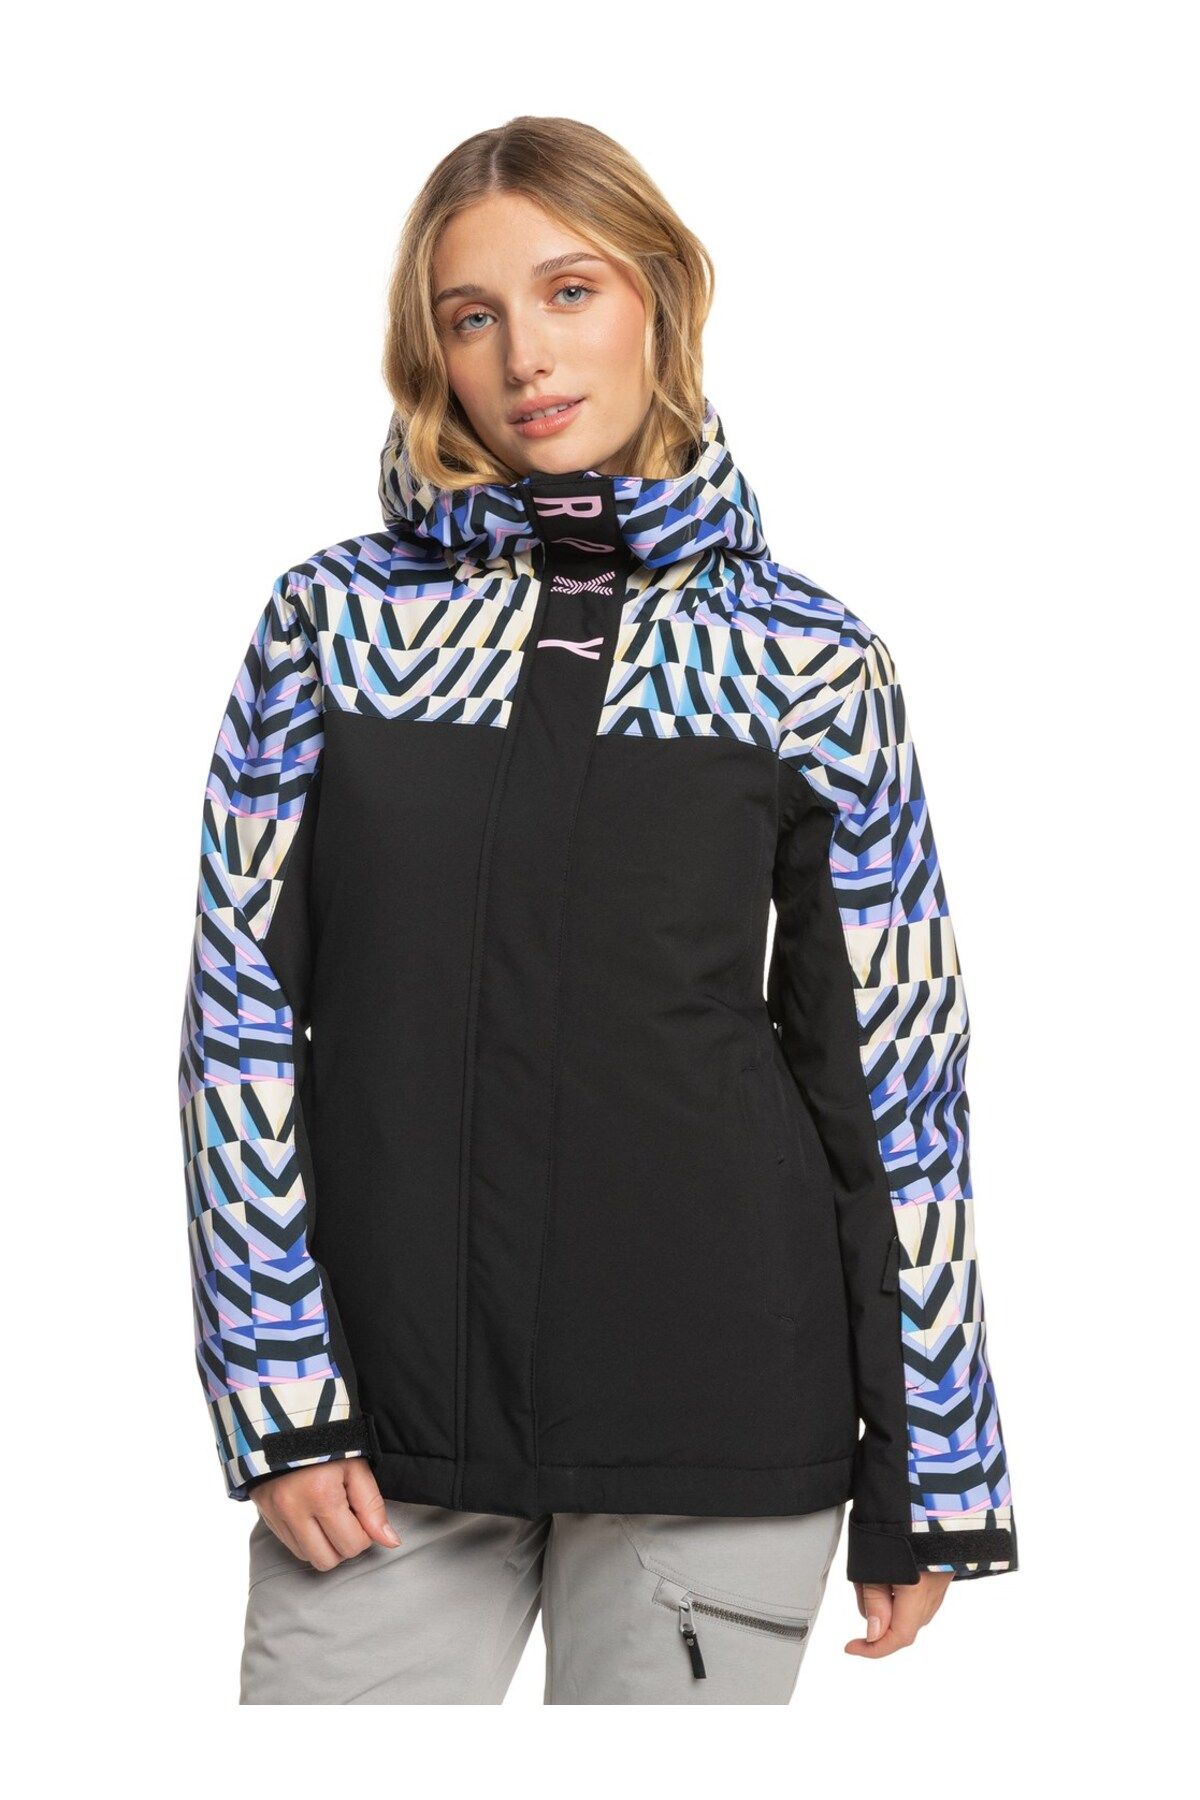 Roxy Kadın Parchment Monıque Galaxy Jk Snowboard Ceketi-erjtj03451-Tec1